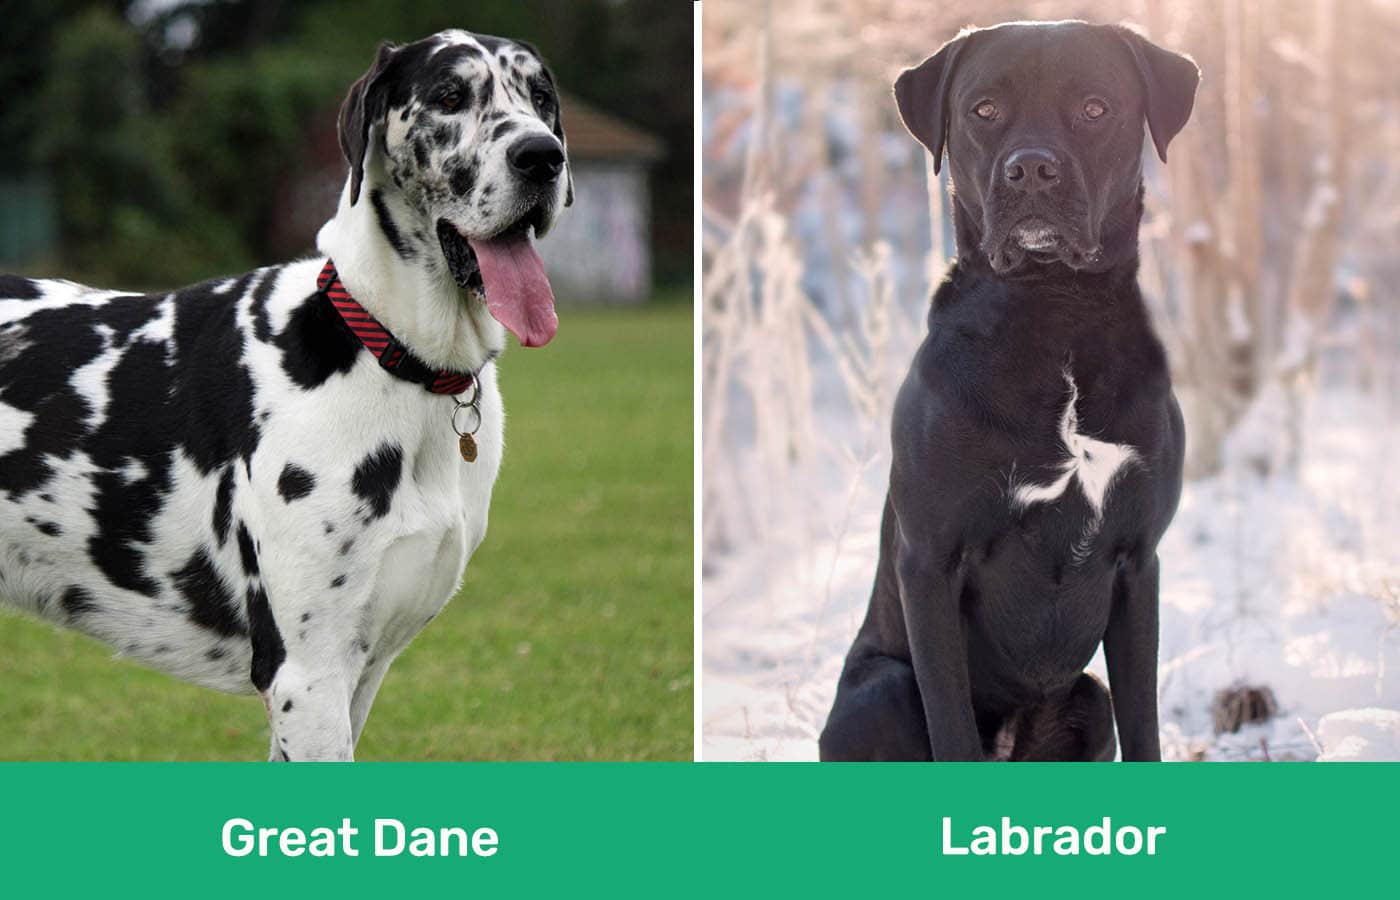 Great Dane vs Labrador side by side